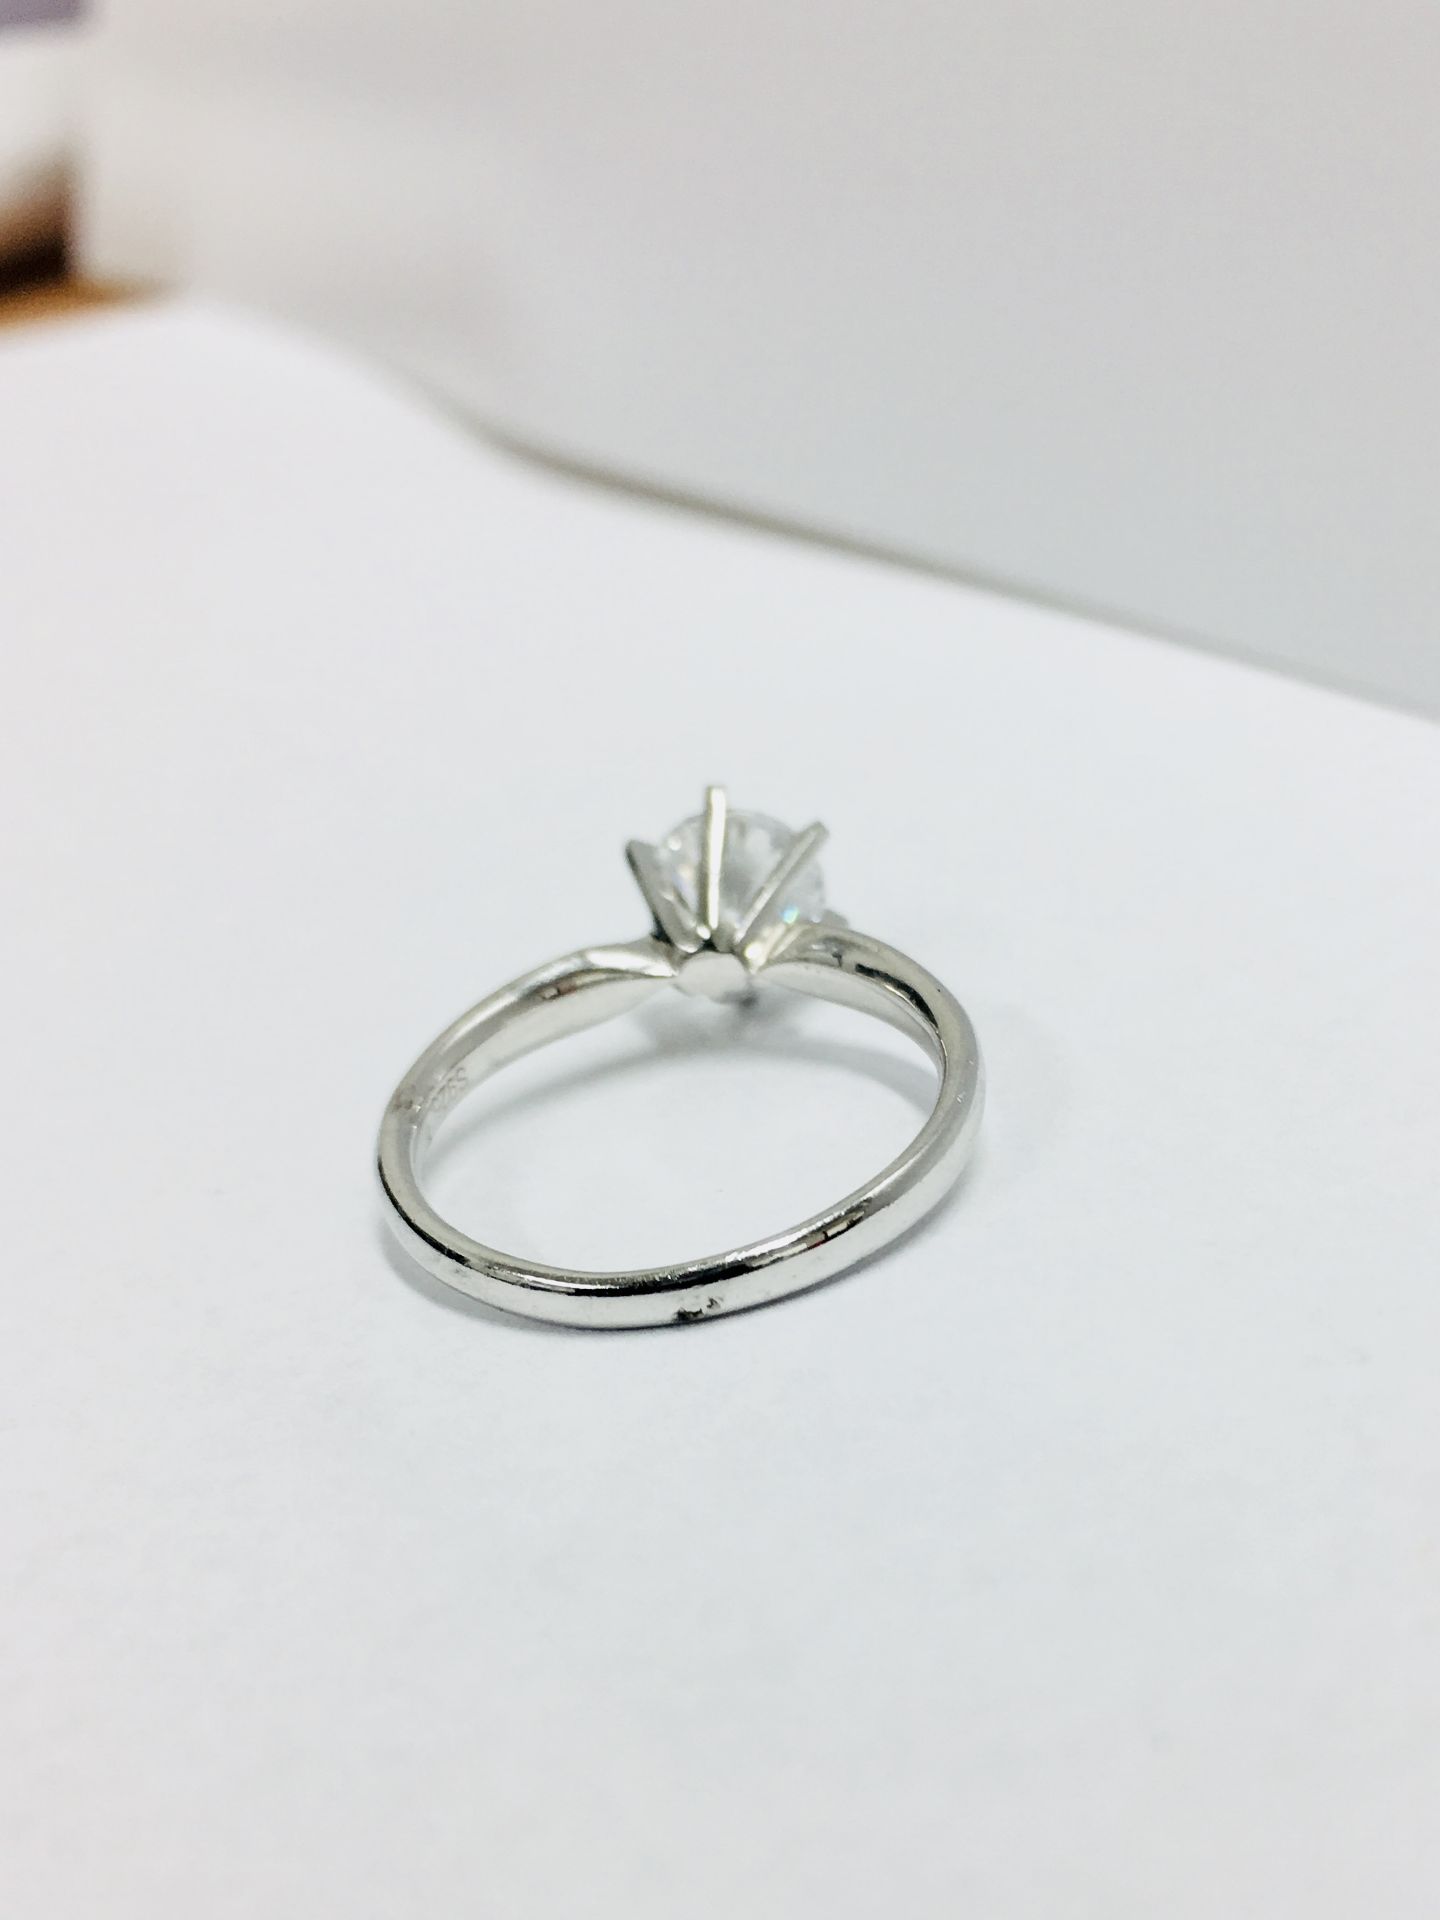 Platinum diamond solitaire ring 6 claw,0.50ct brilliant cut diamond D colour vs clarity ,3.9gms - Image 4 of 4